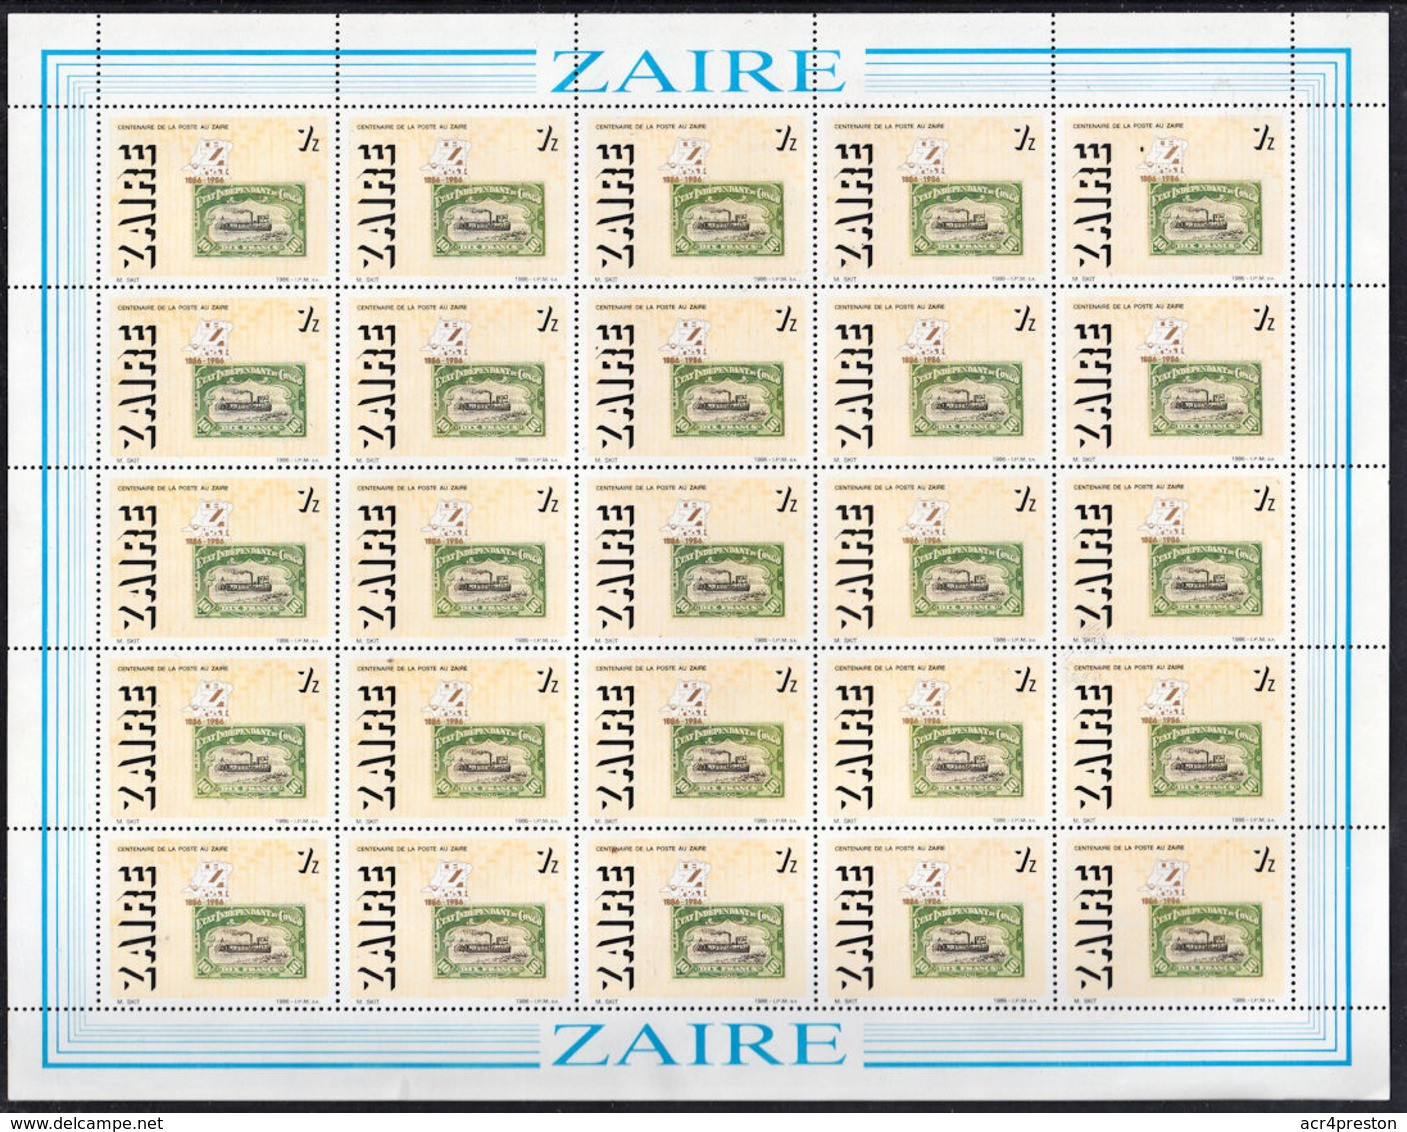 D0190 ZAIRE 1988, SG 1267 'Cenzapost' Stamp Centenary, Complete Sheet, MNH - Ungebraucht